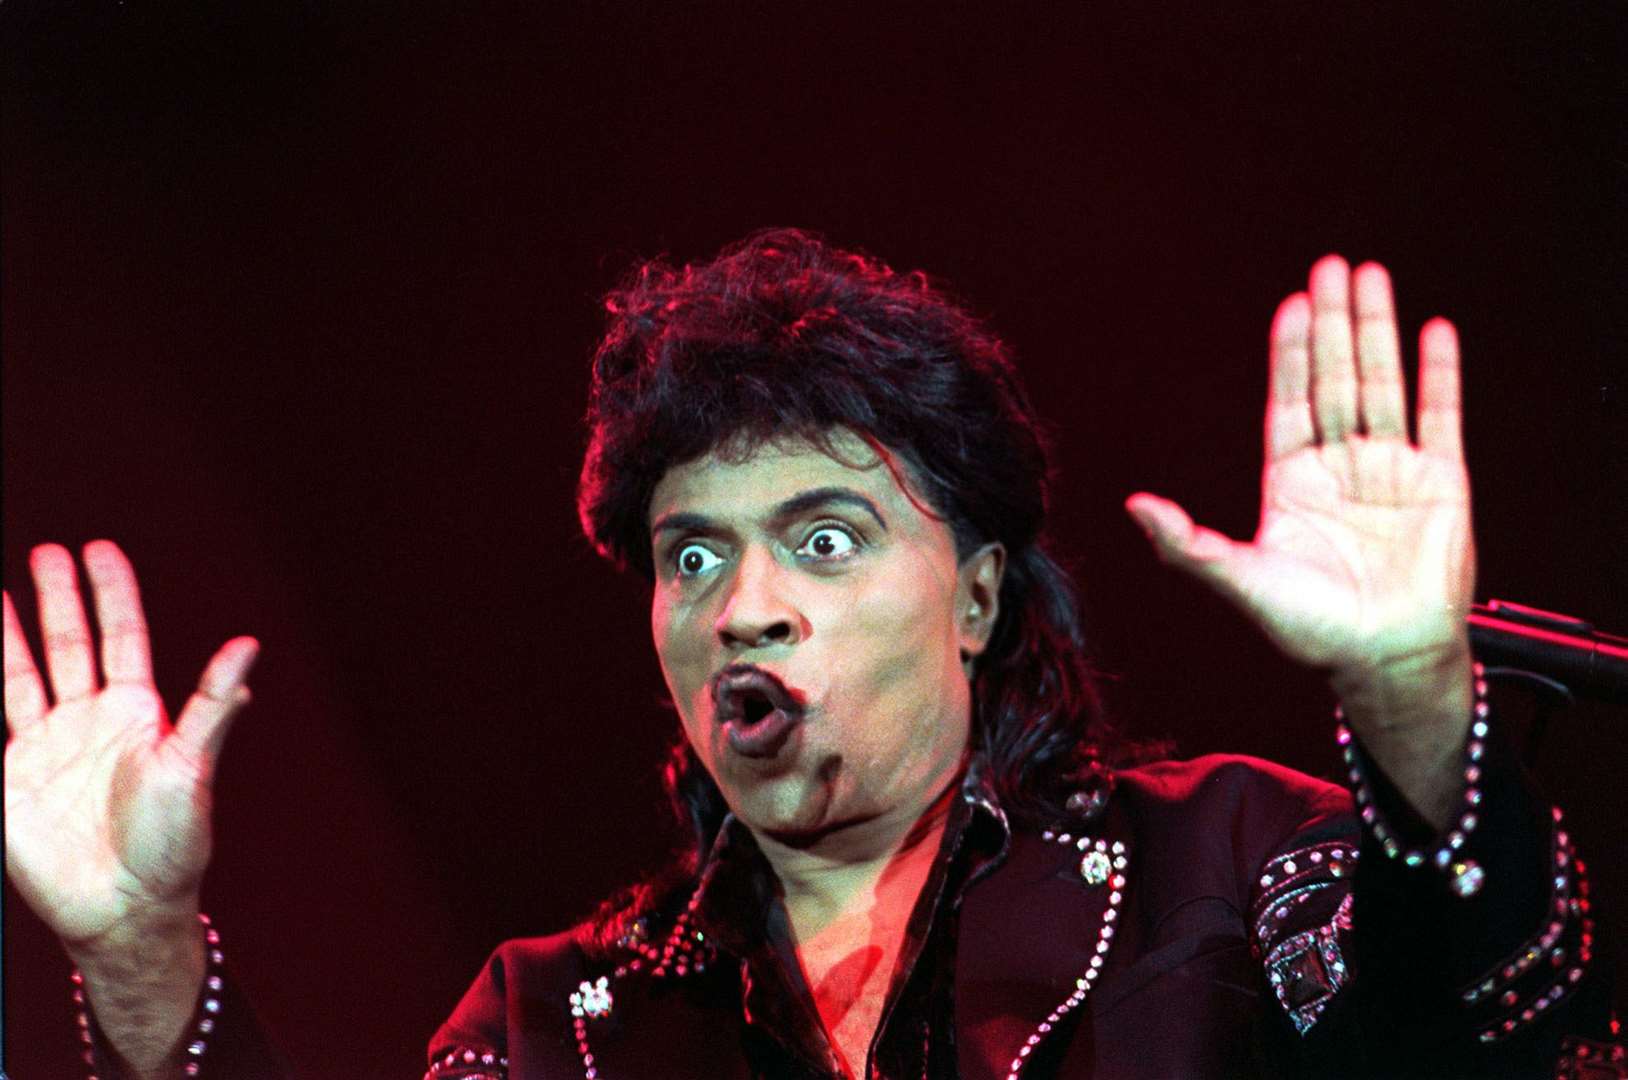 American rock ‘n’ roll star Little Richard was among the celebrities who died in 2020 (Yui Mok/PA)